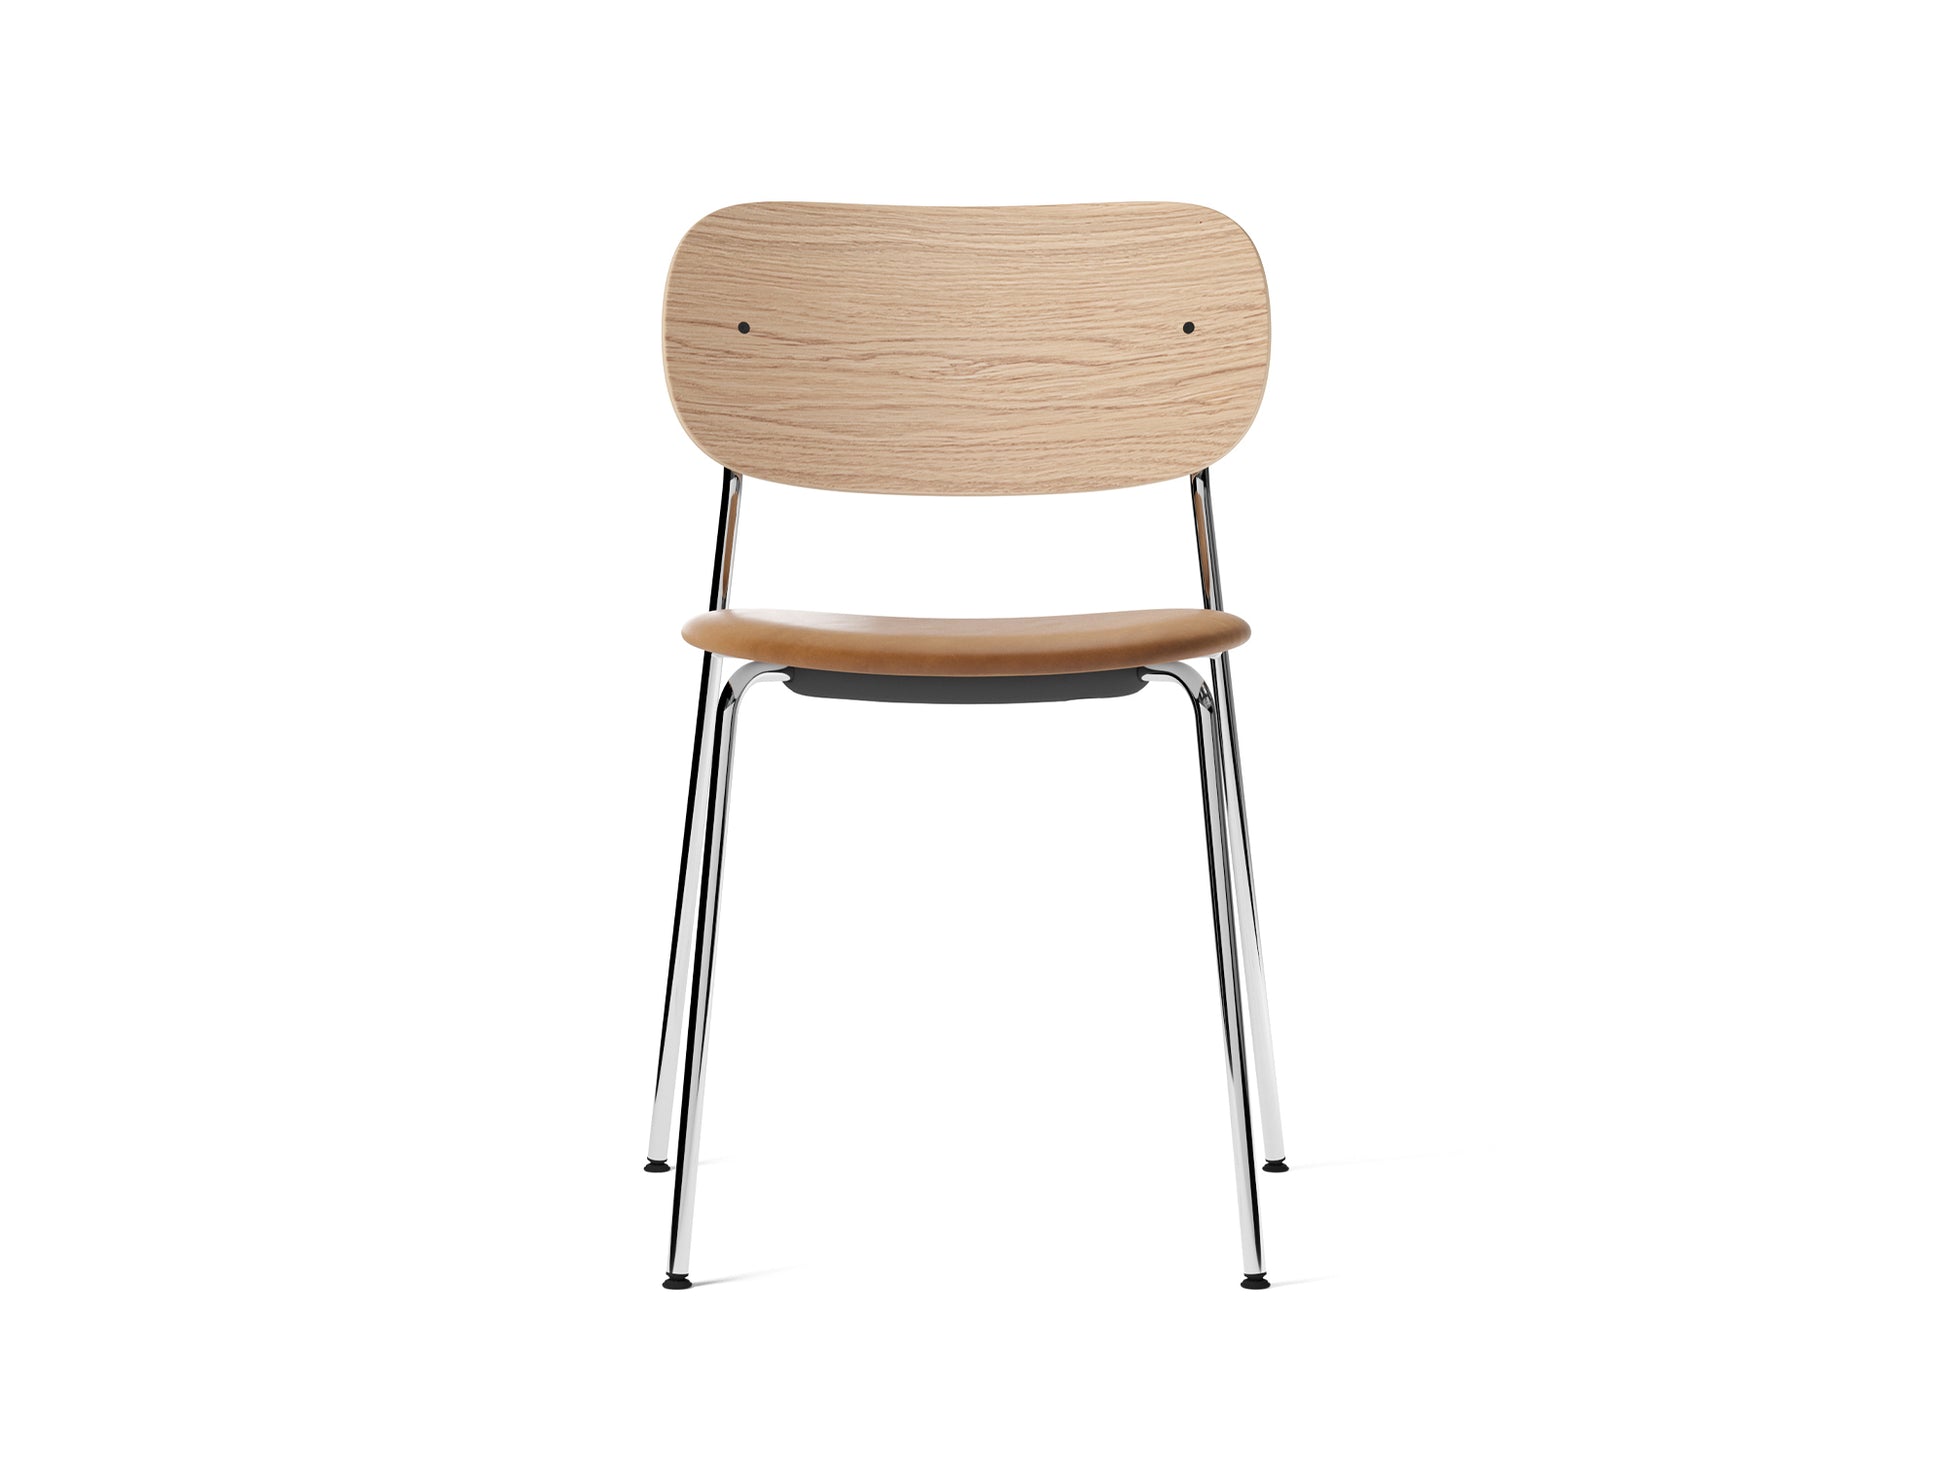 Co Dining Chair Upholstered by Menu - Without Armrest / Chromed Steel / Natural Oak / Dakar Cognac Leather